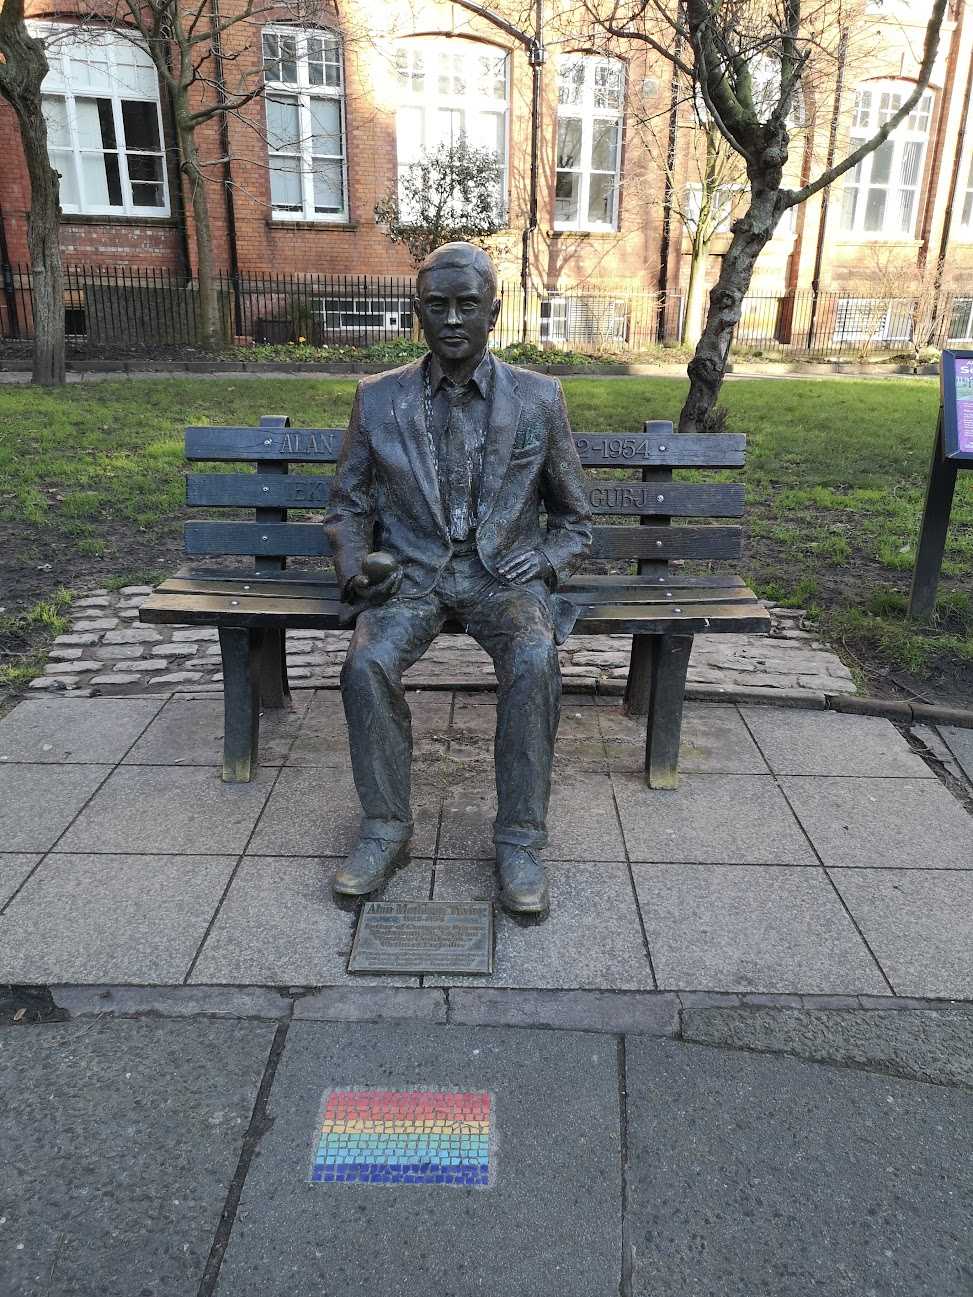 pomnik Alana Turinga, Manchester